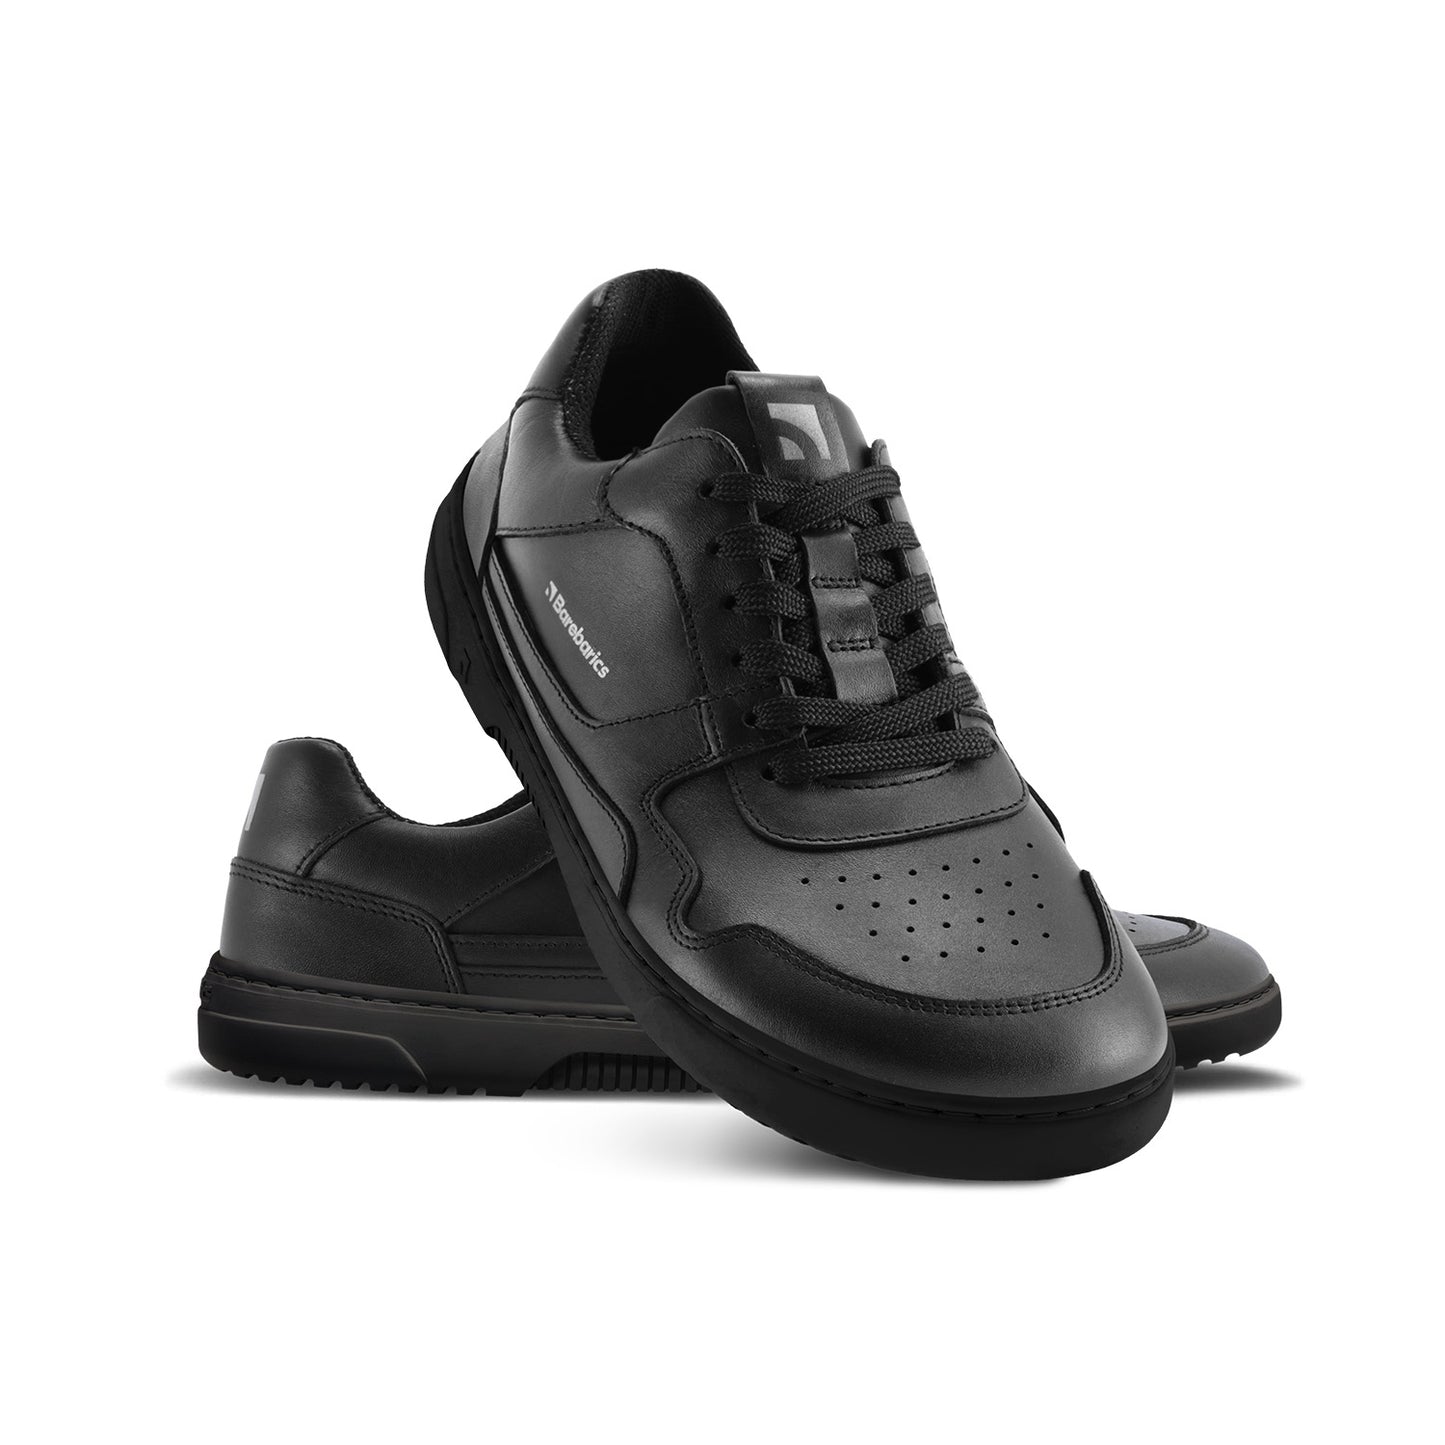 Barebarics Zing Barefoot Sneakers - Black (Leather)